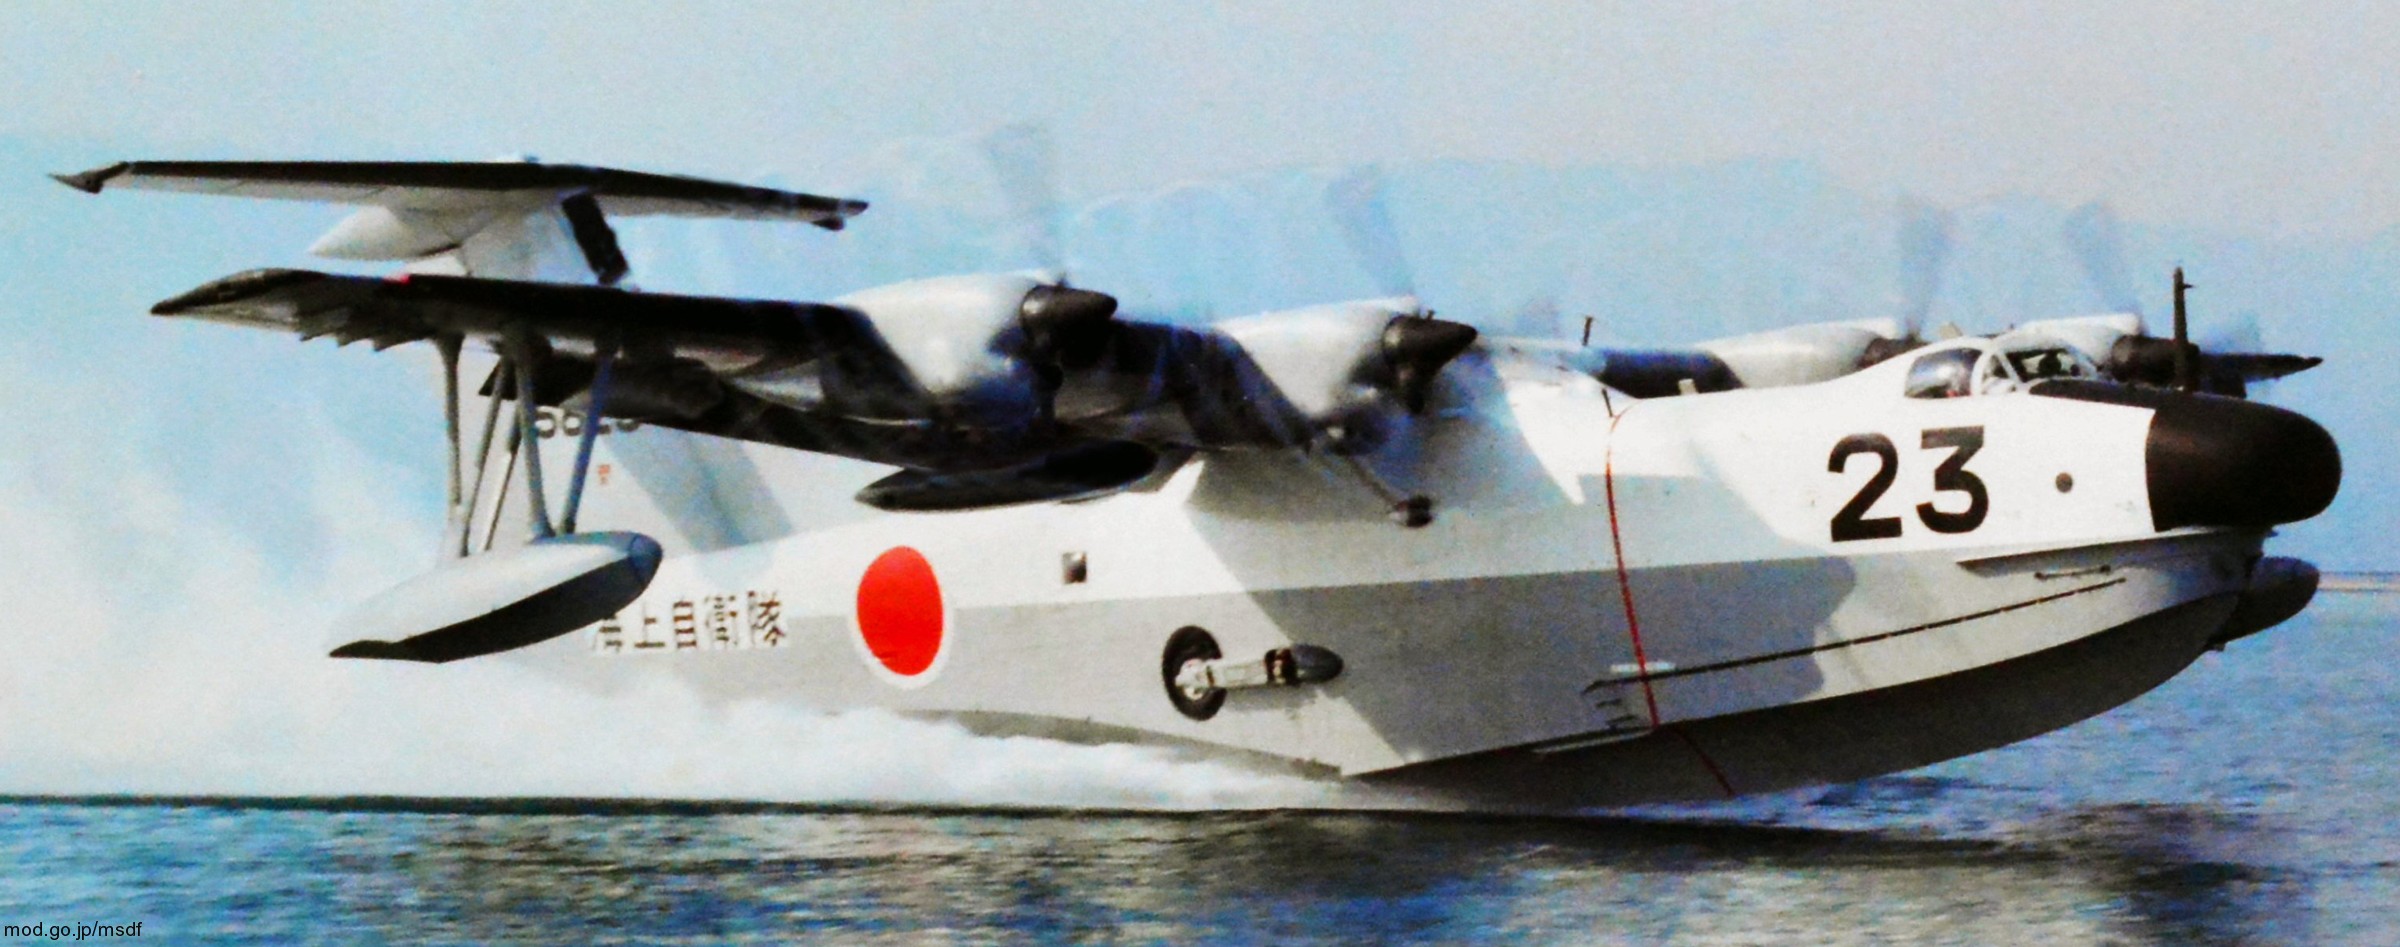 shin meiwa ps-1 flying boat japan maritime self defense force jmsdf sar 71 squadron atsugi 5823 03